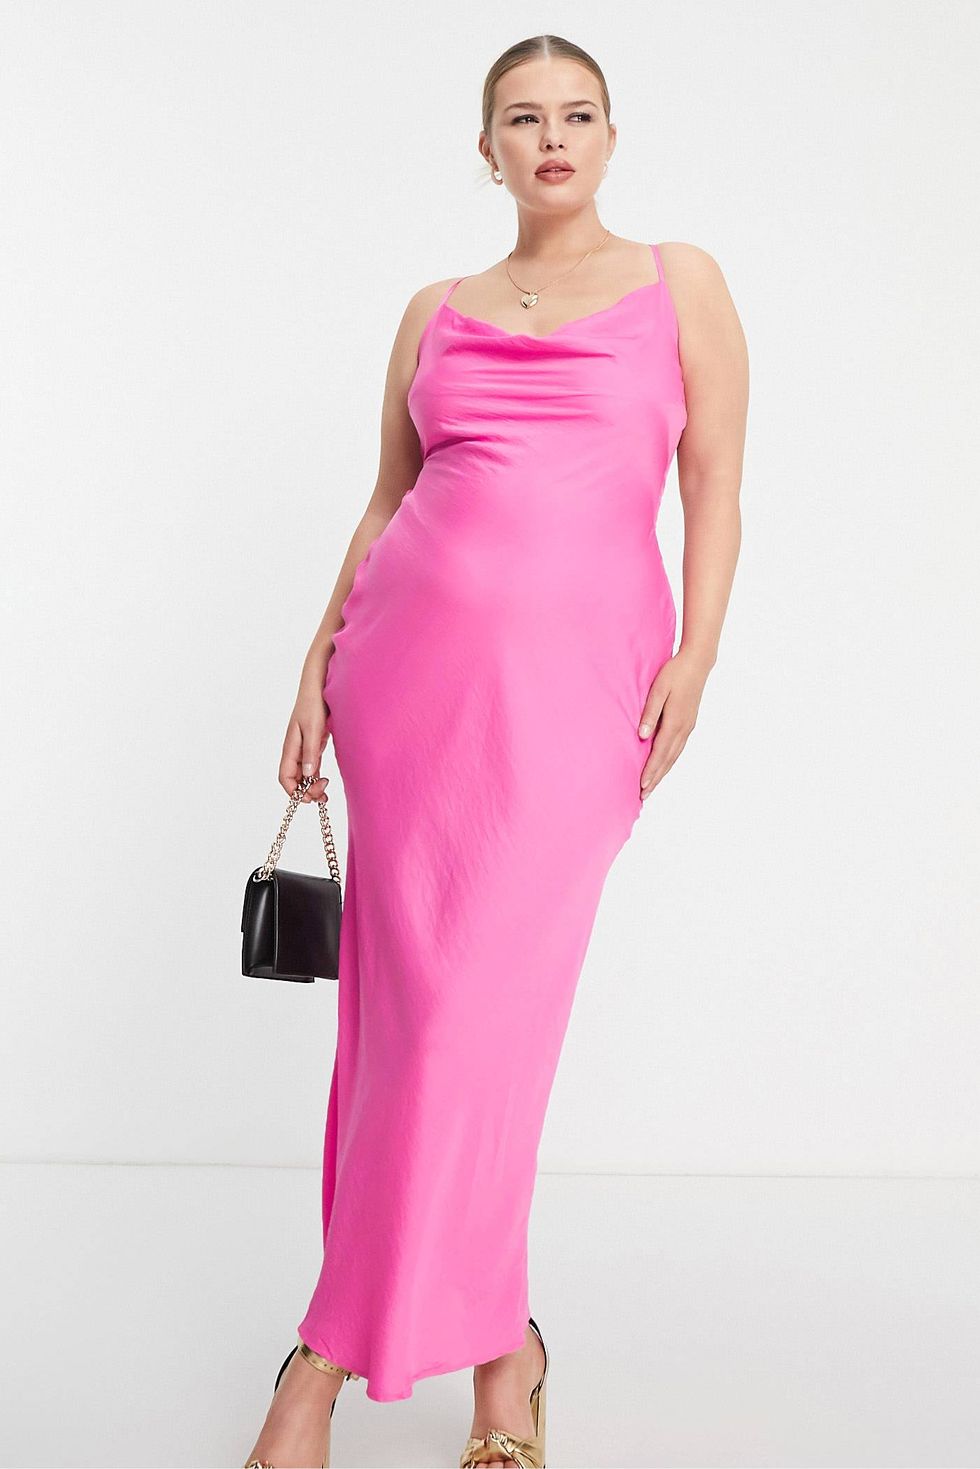 Satin cowl neck midi dress in pink - ASOS summer dresses